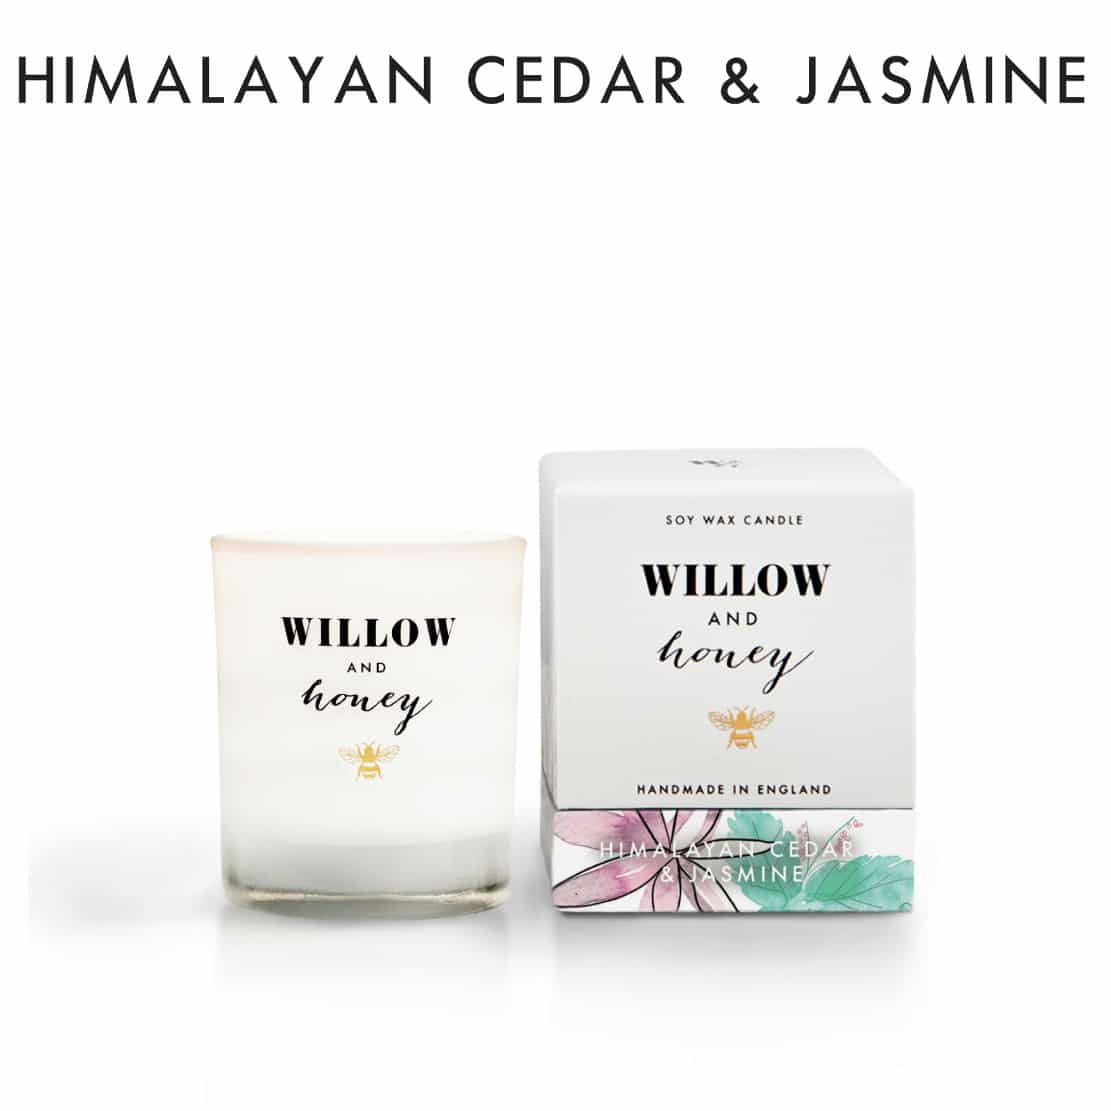 Willow and Honey Himalayan Cedar and Jasmine Candle 60g